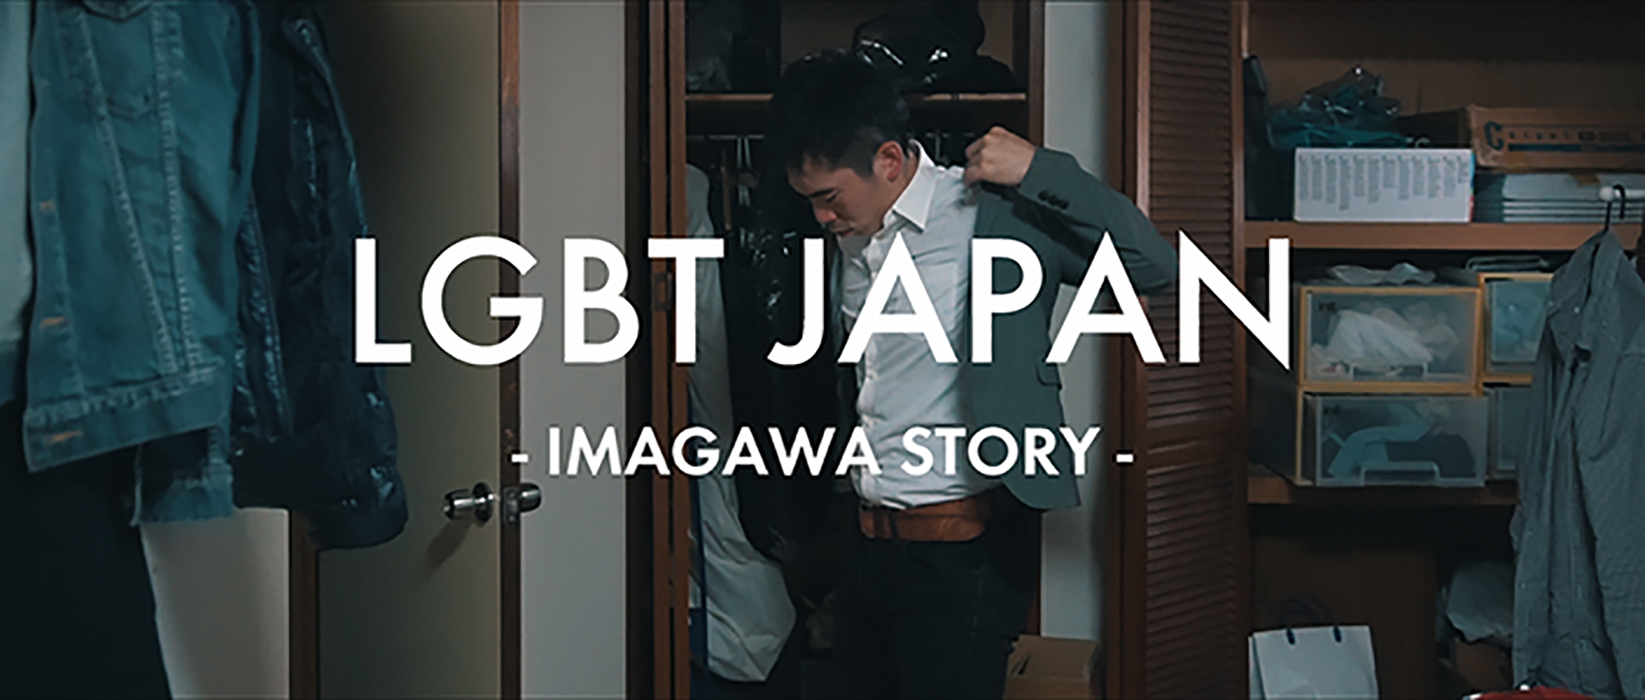 LGBT JAPAN Imagawa's Story